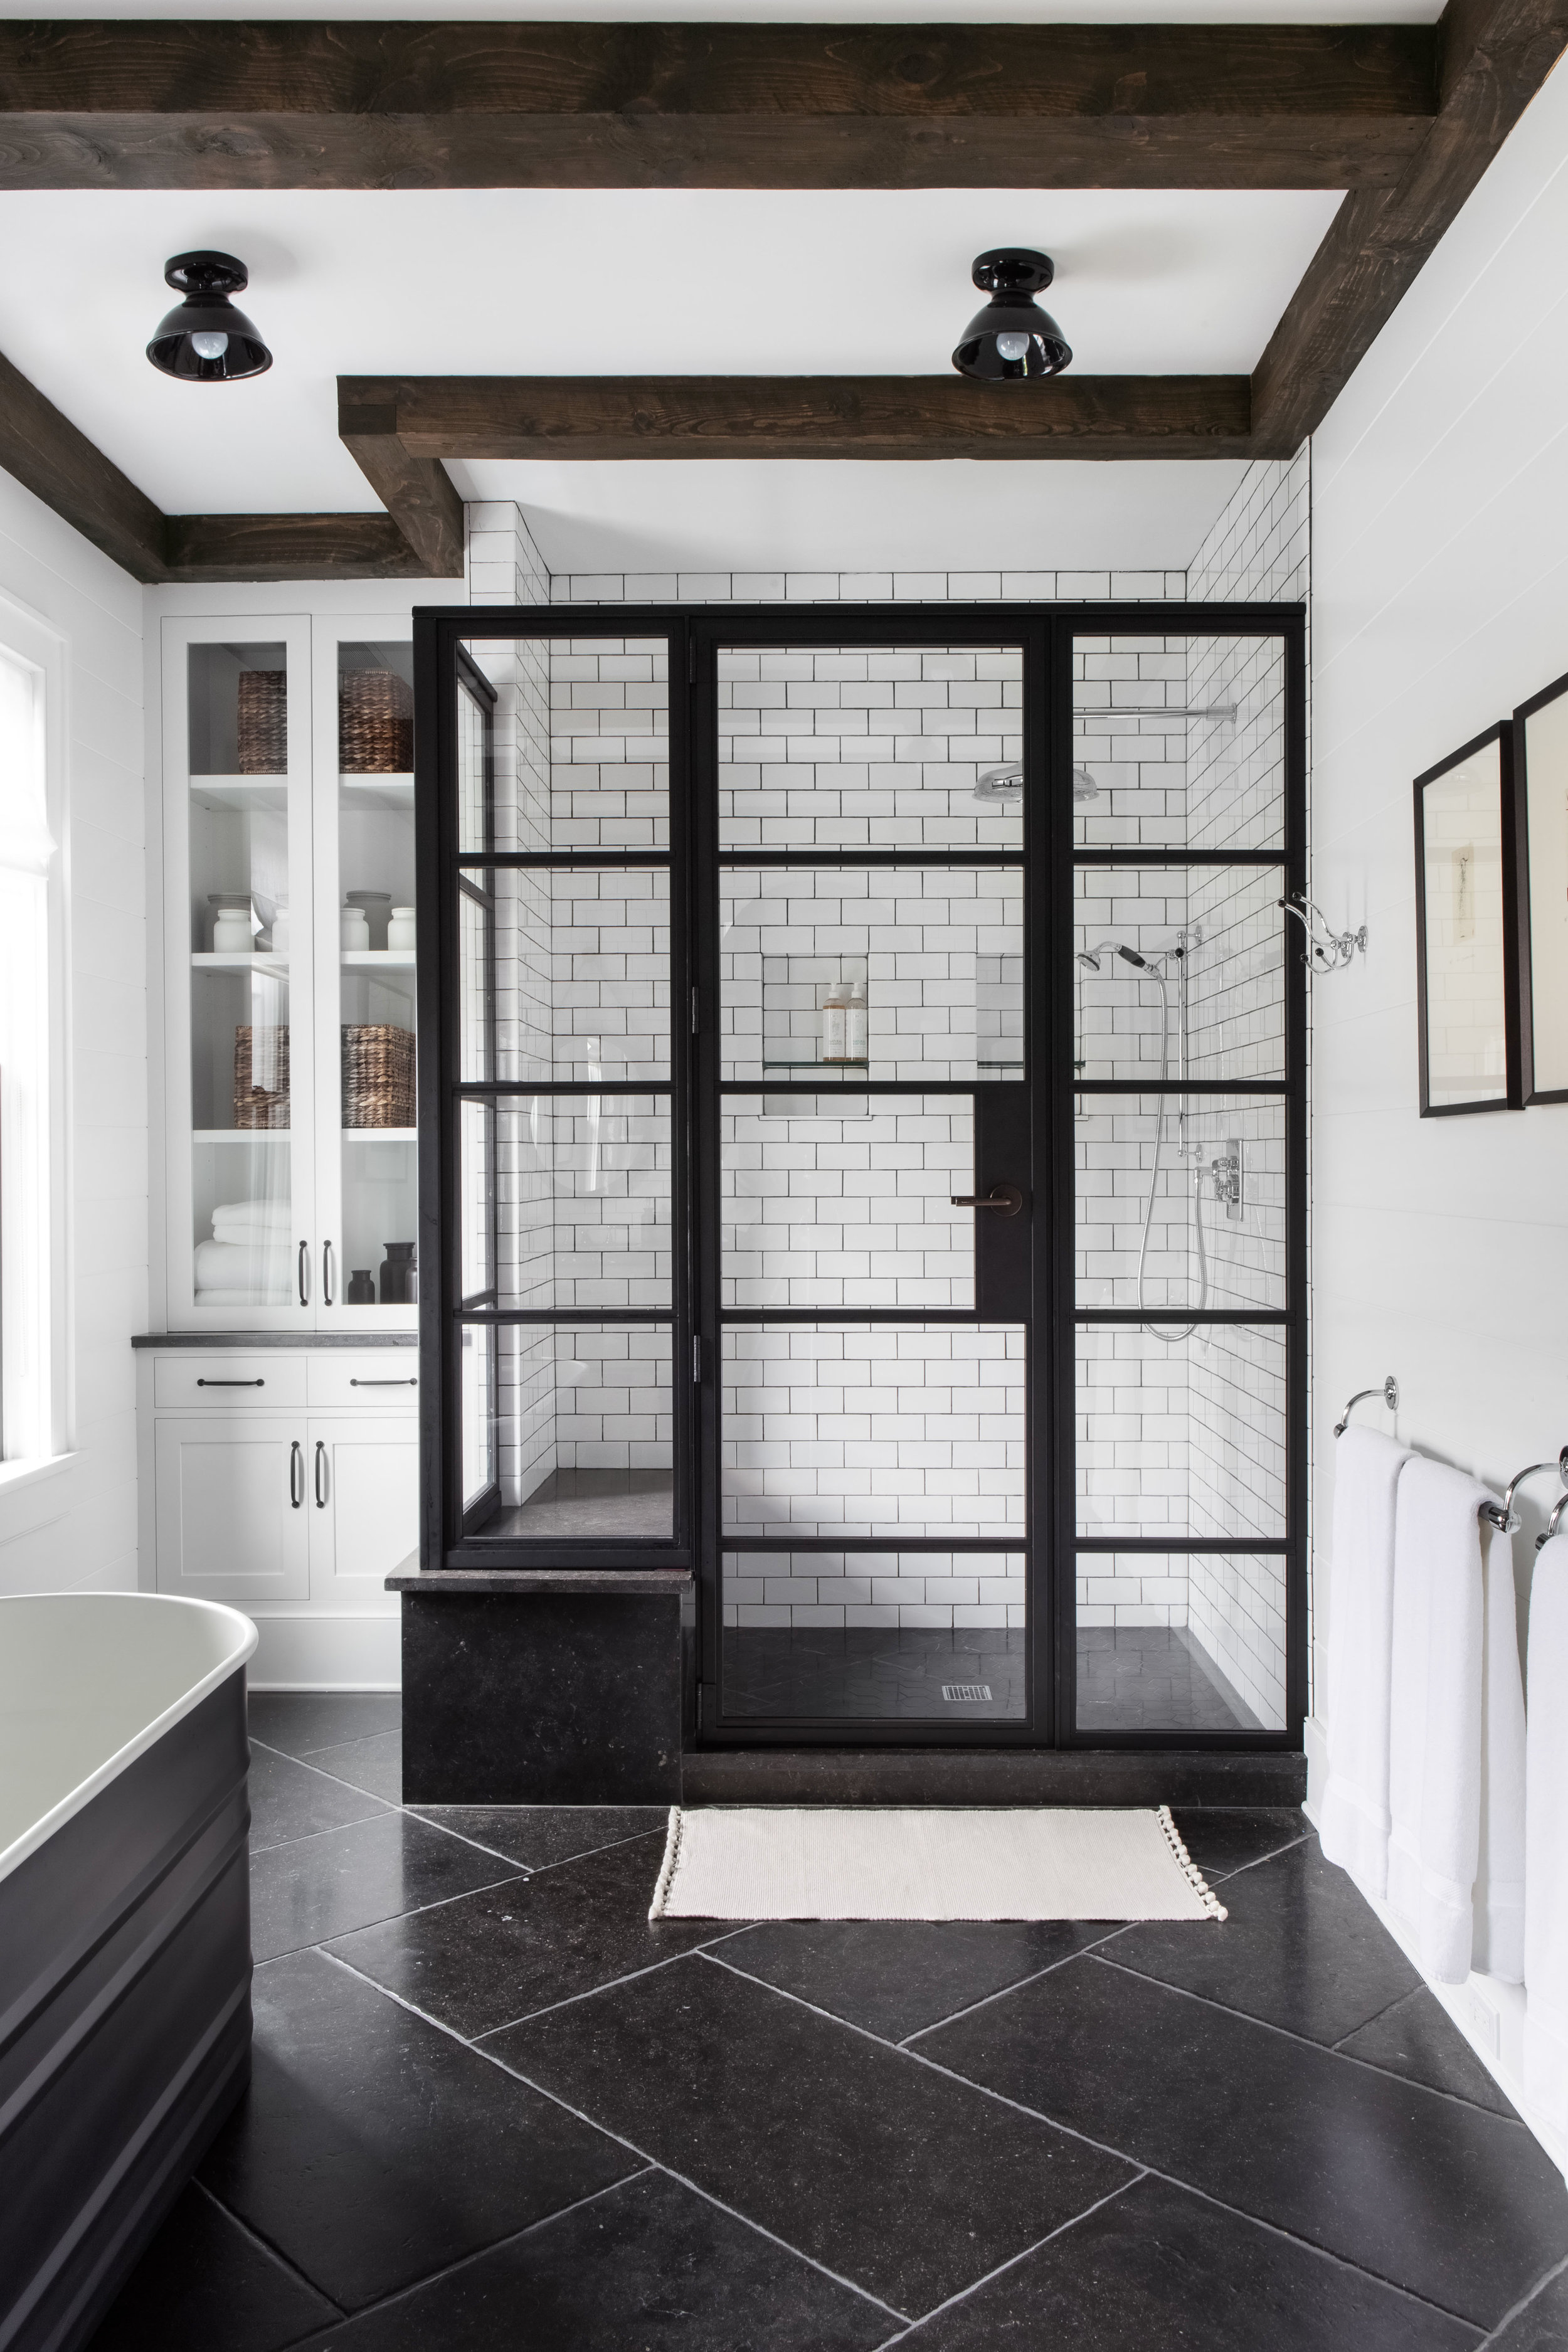 These 15 Bathroom Design Ideas Will Make Your Bathroom Look Amazing 